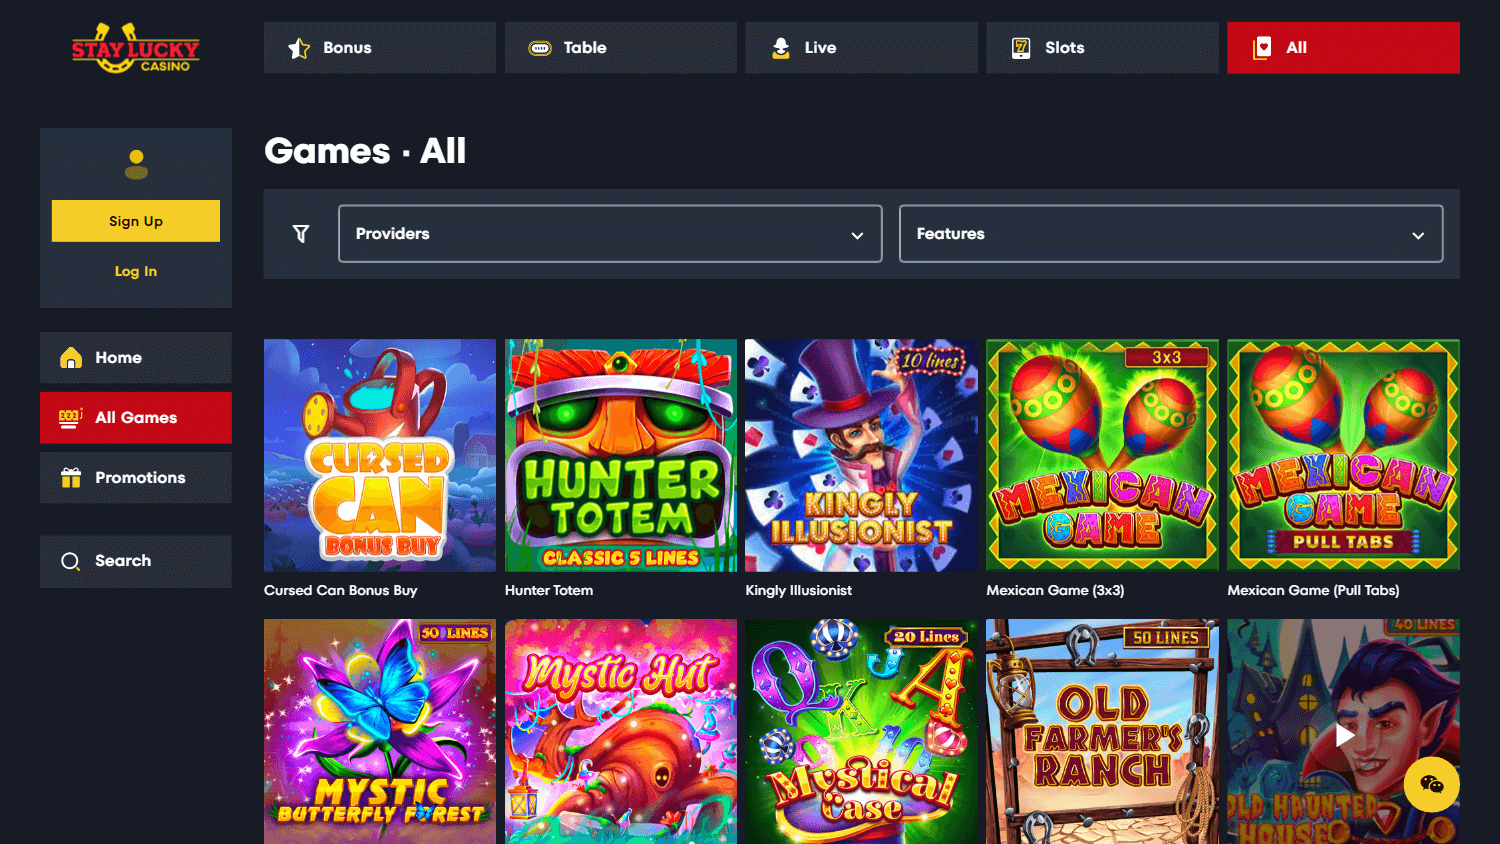 stay_lucky_casino_game_gallery_desktop